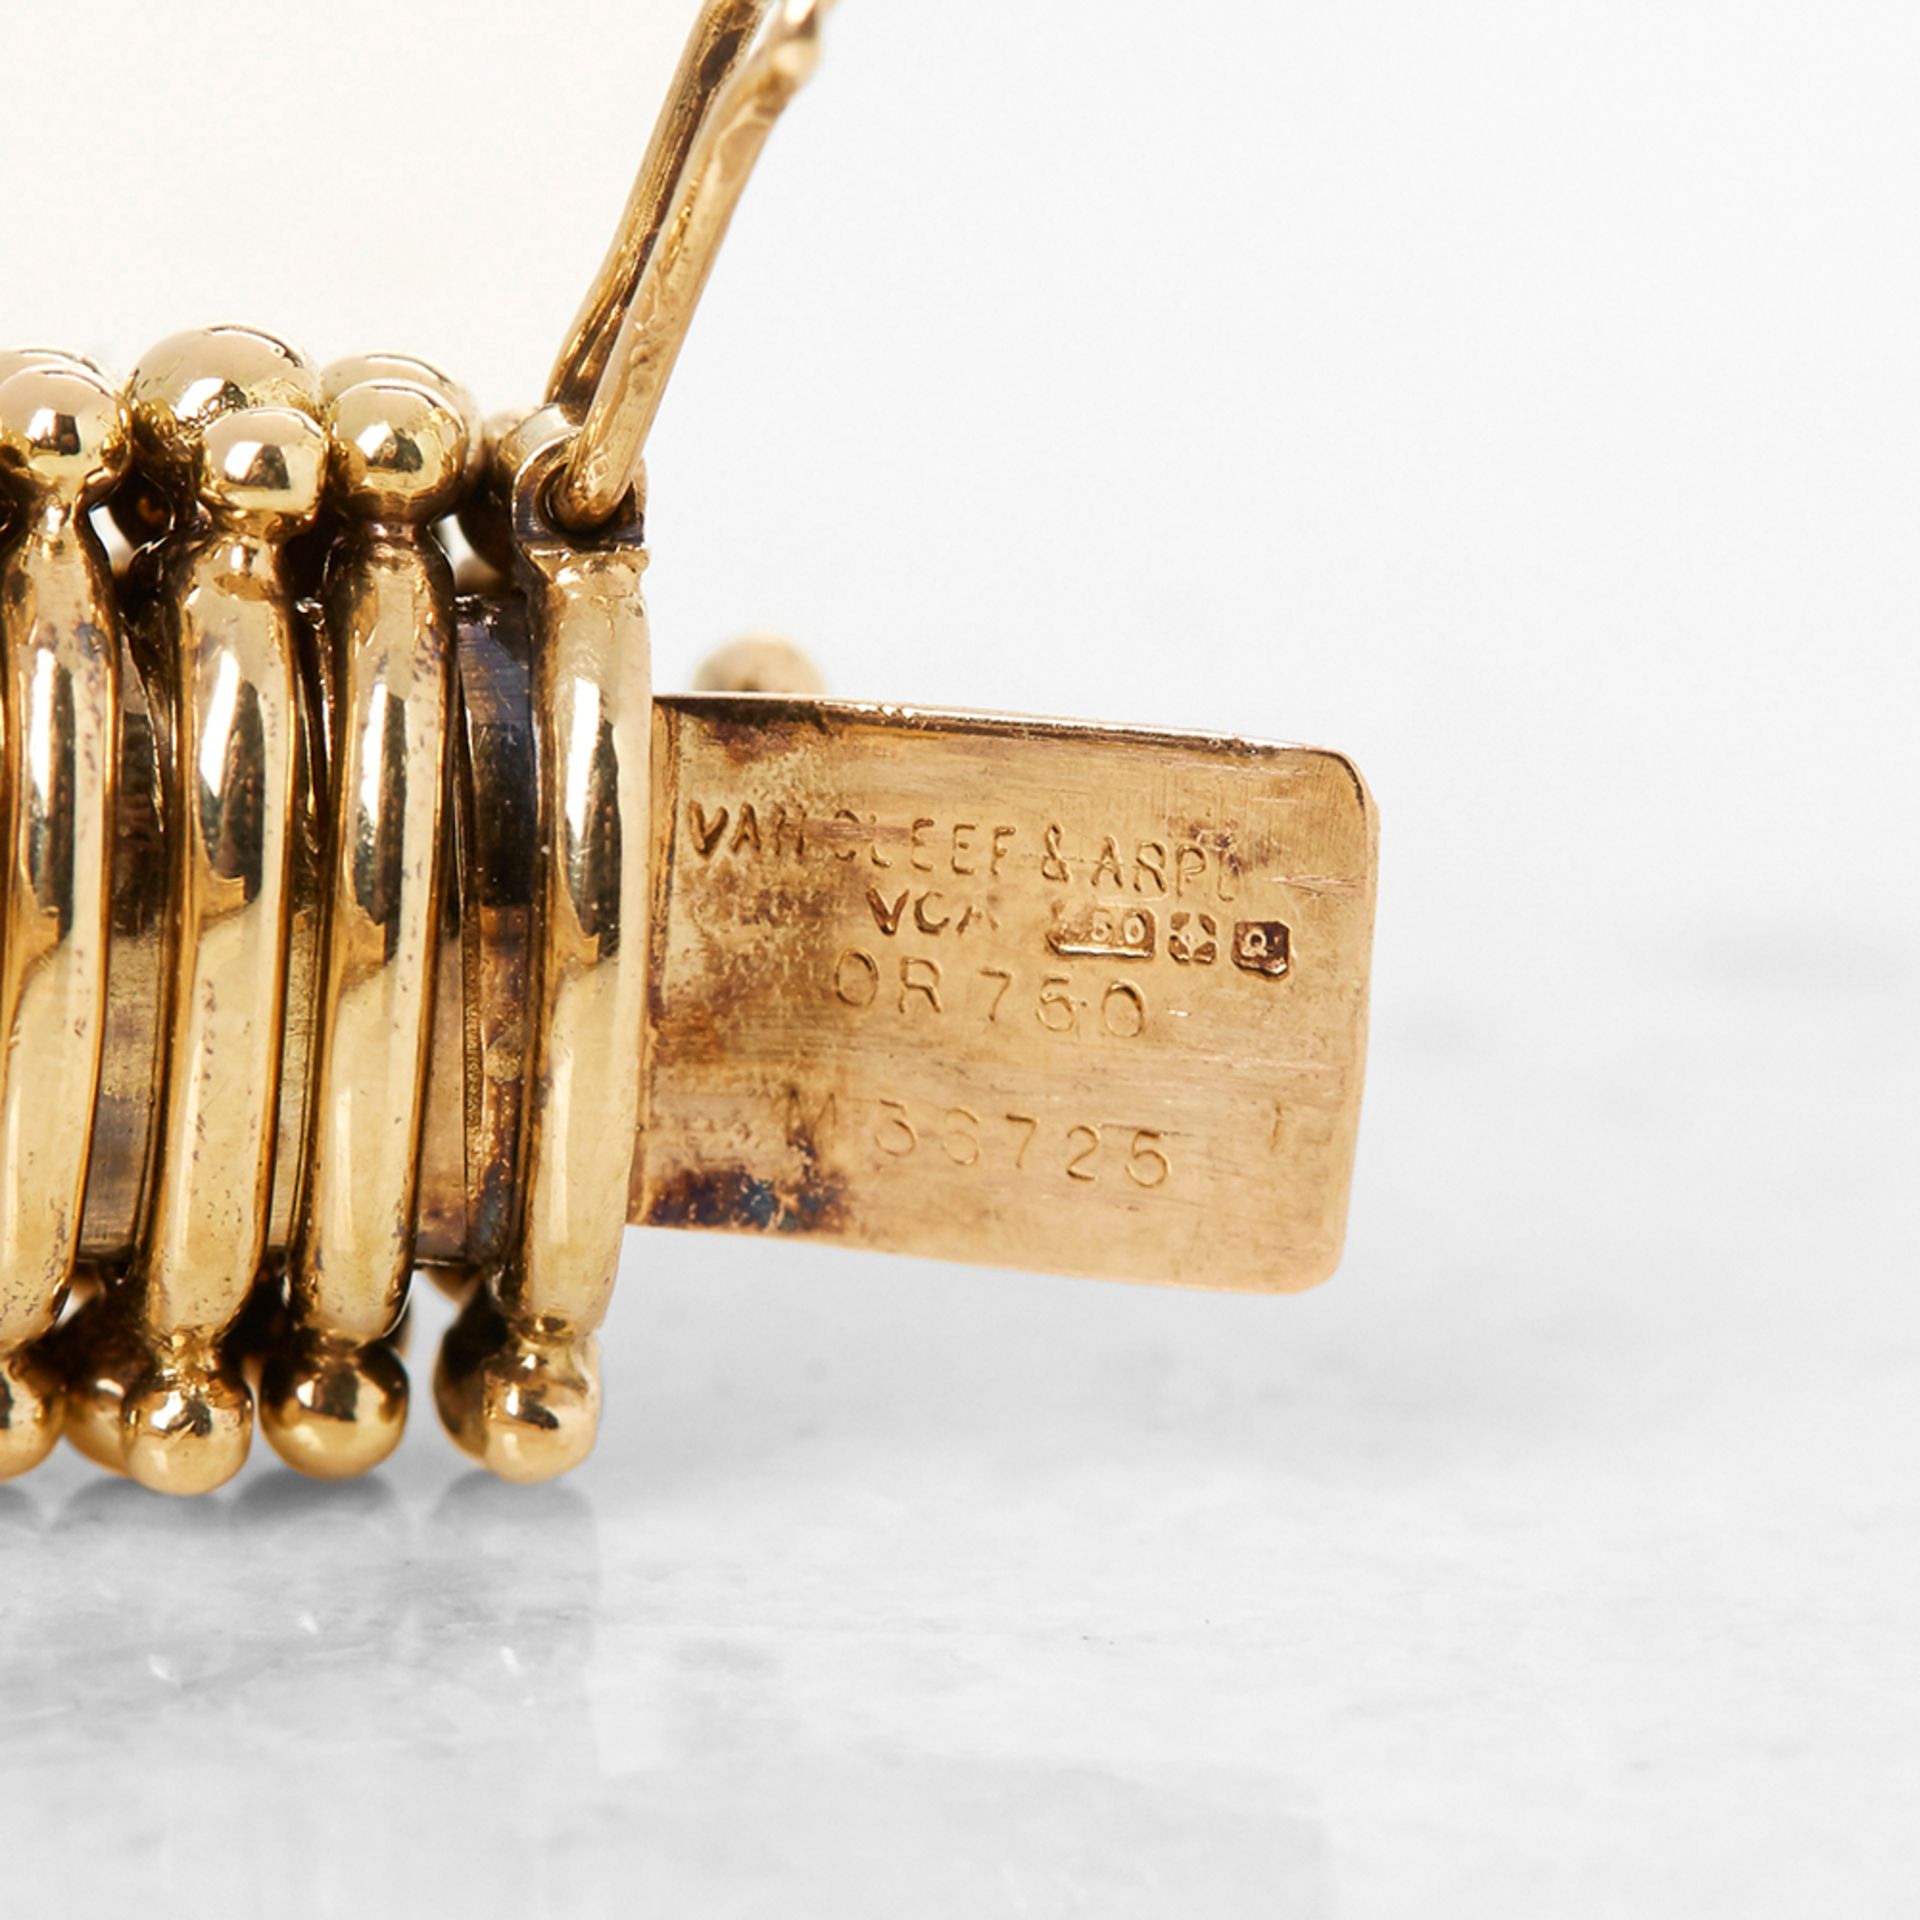 Van Cleef & Arpels 18k Yellow Gold Ruby & Diamond Vintage Statement Bracelet - Image 2 of 7